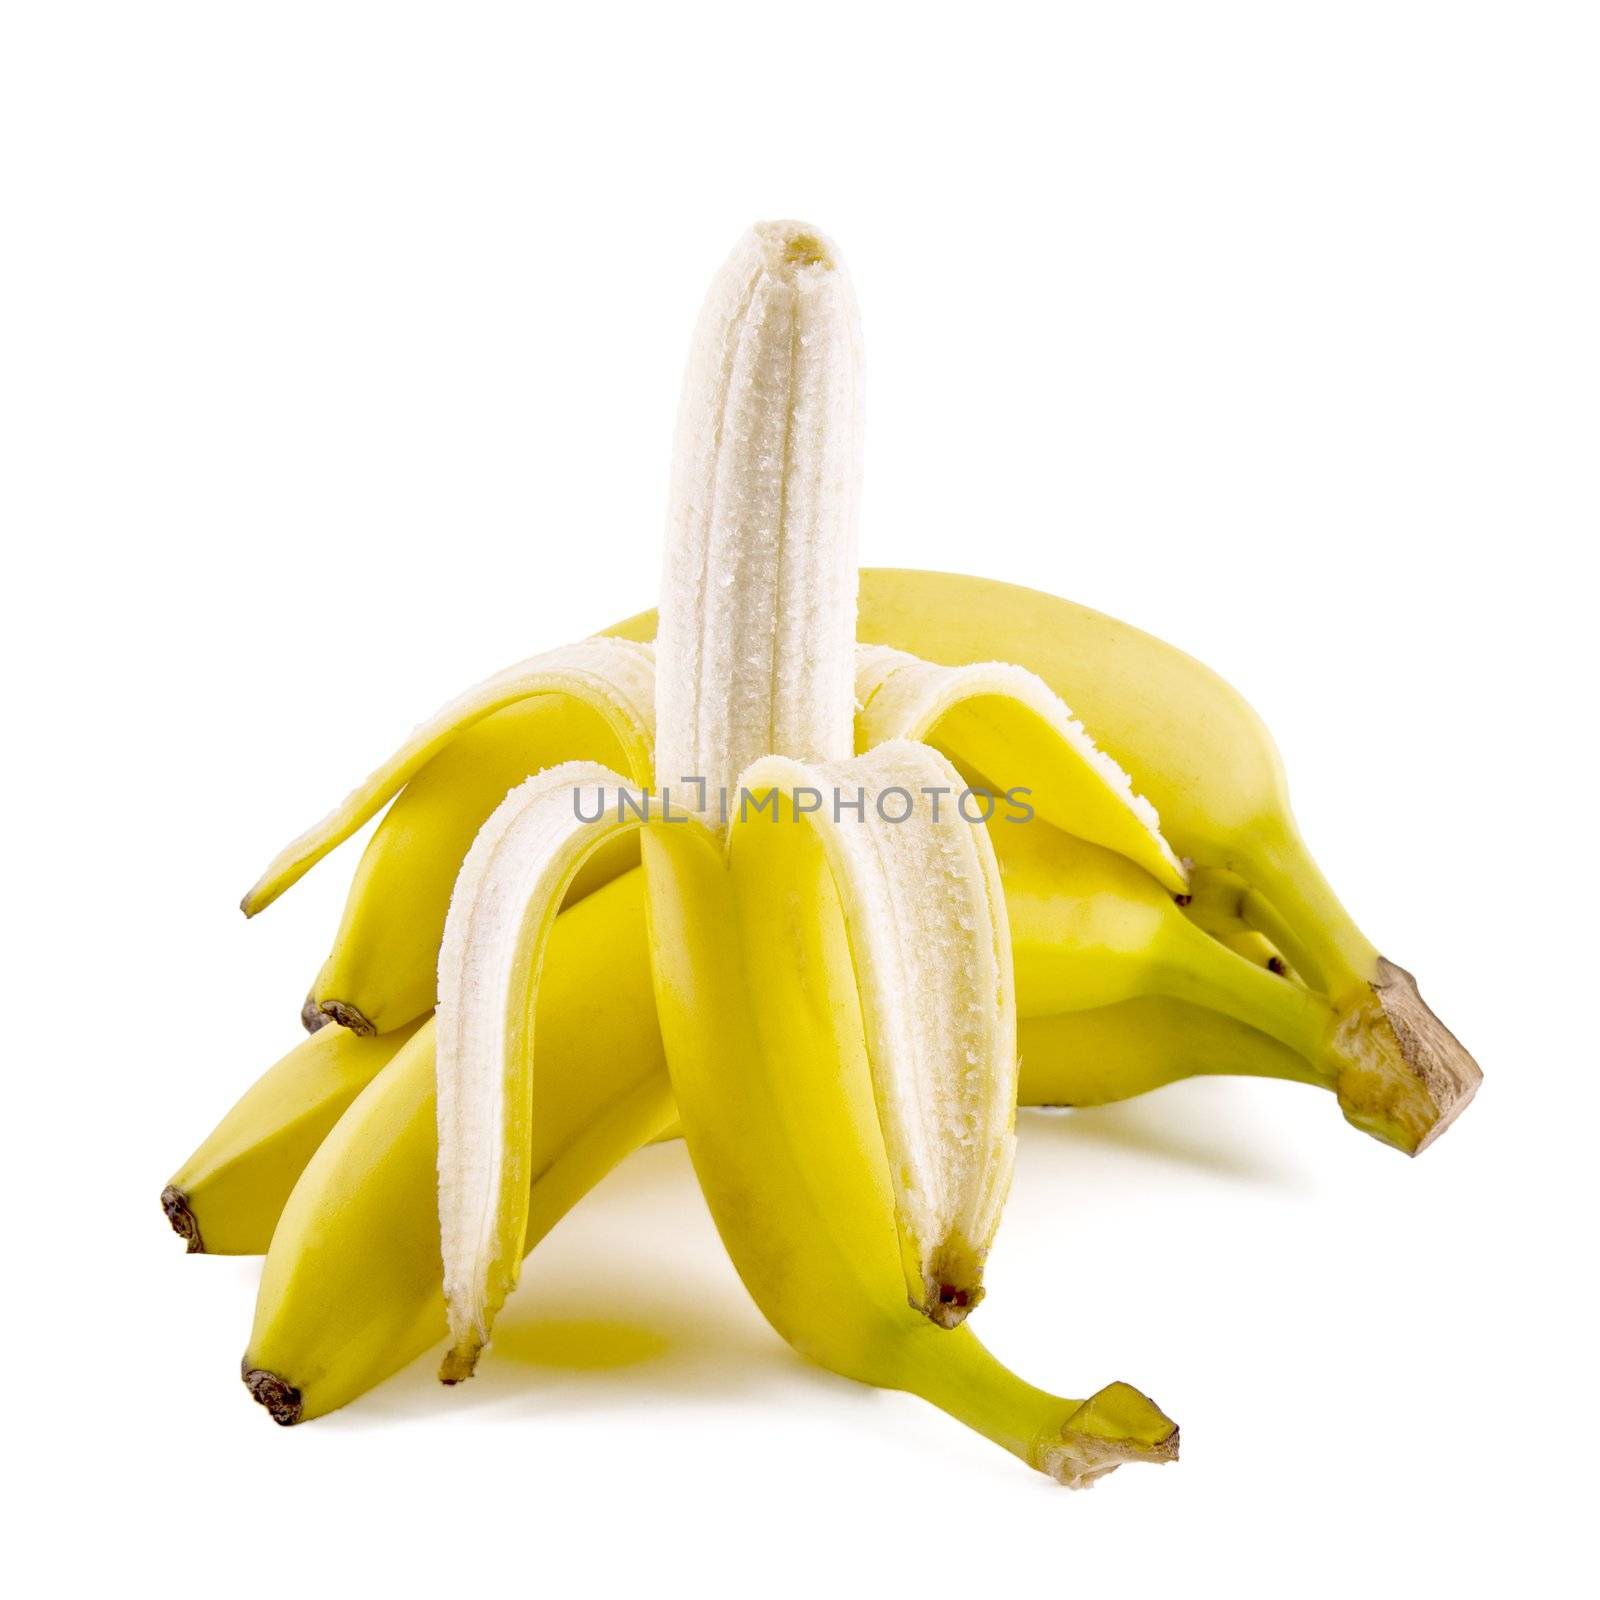 Bunch of fresh bananas by Gbuglok